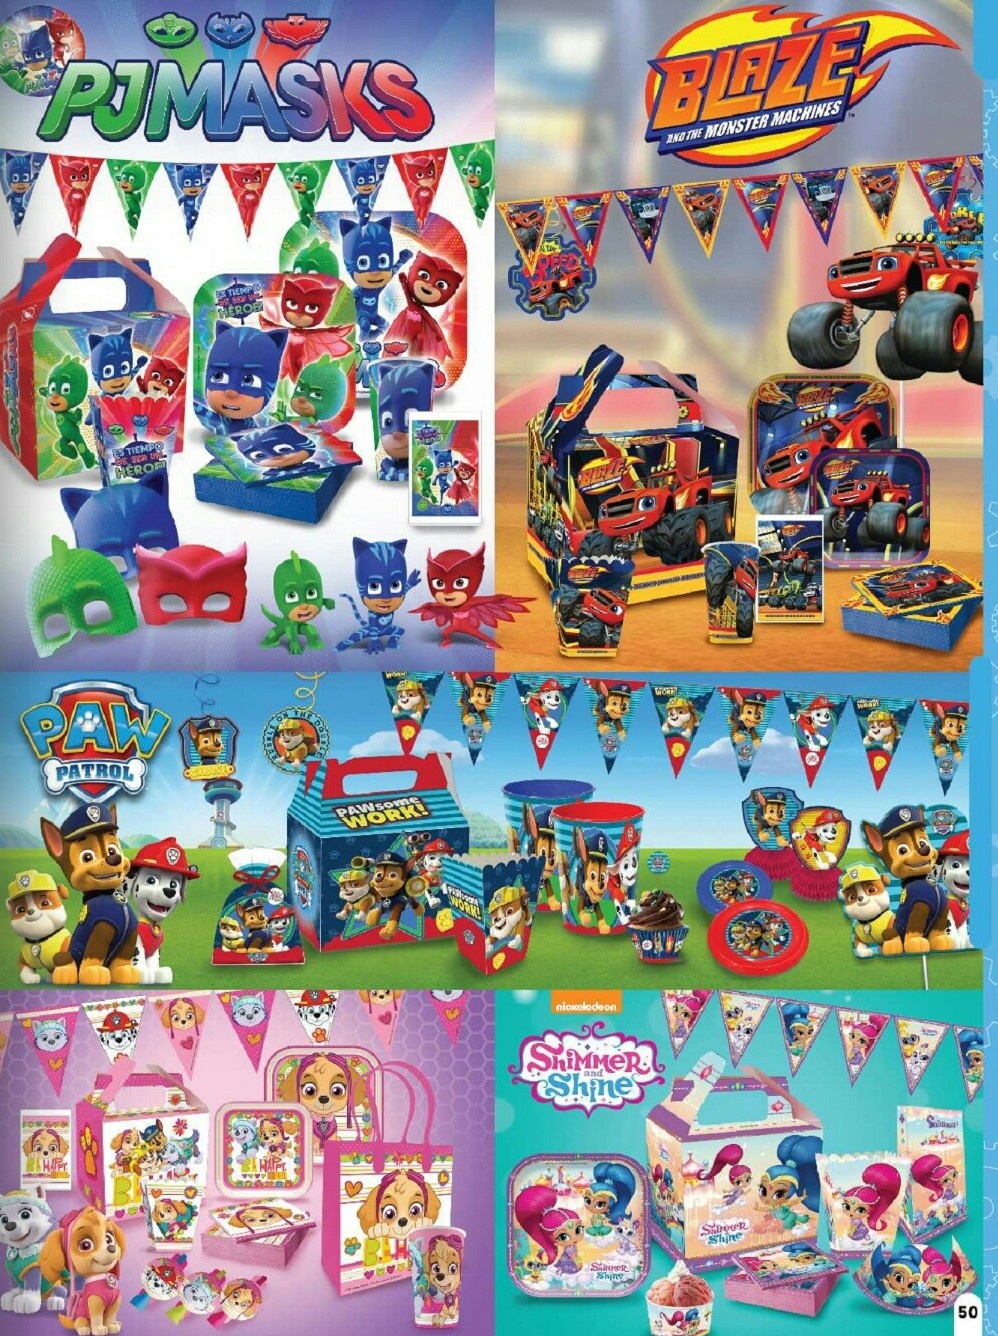 Catalogo de juguetes el Costo 2018 p50